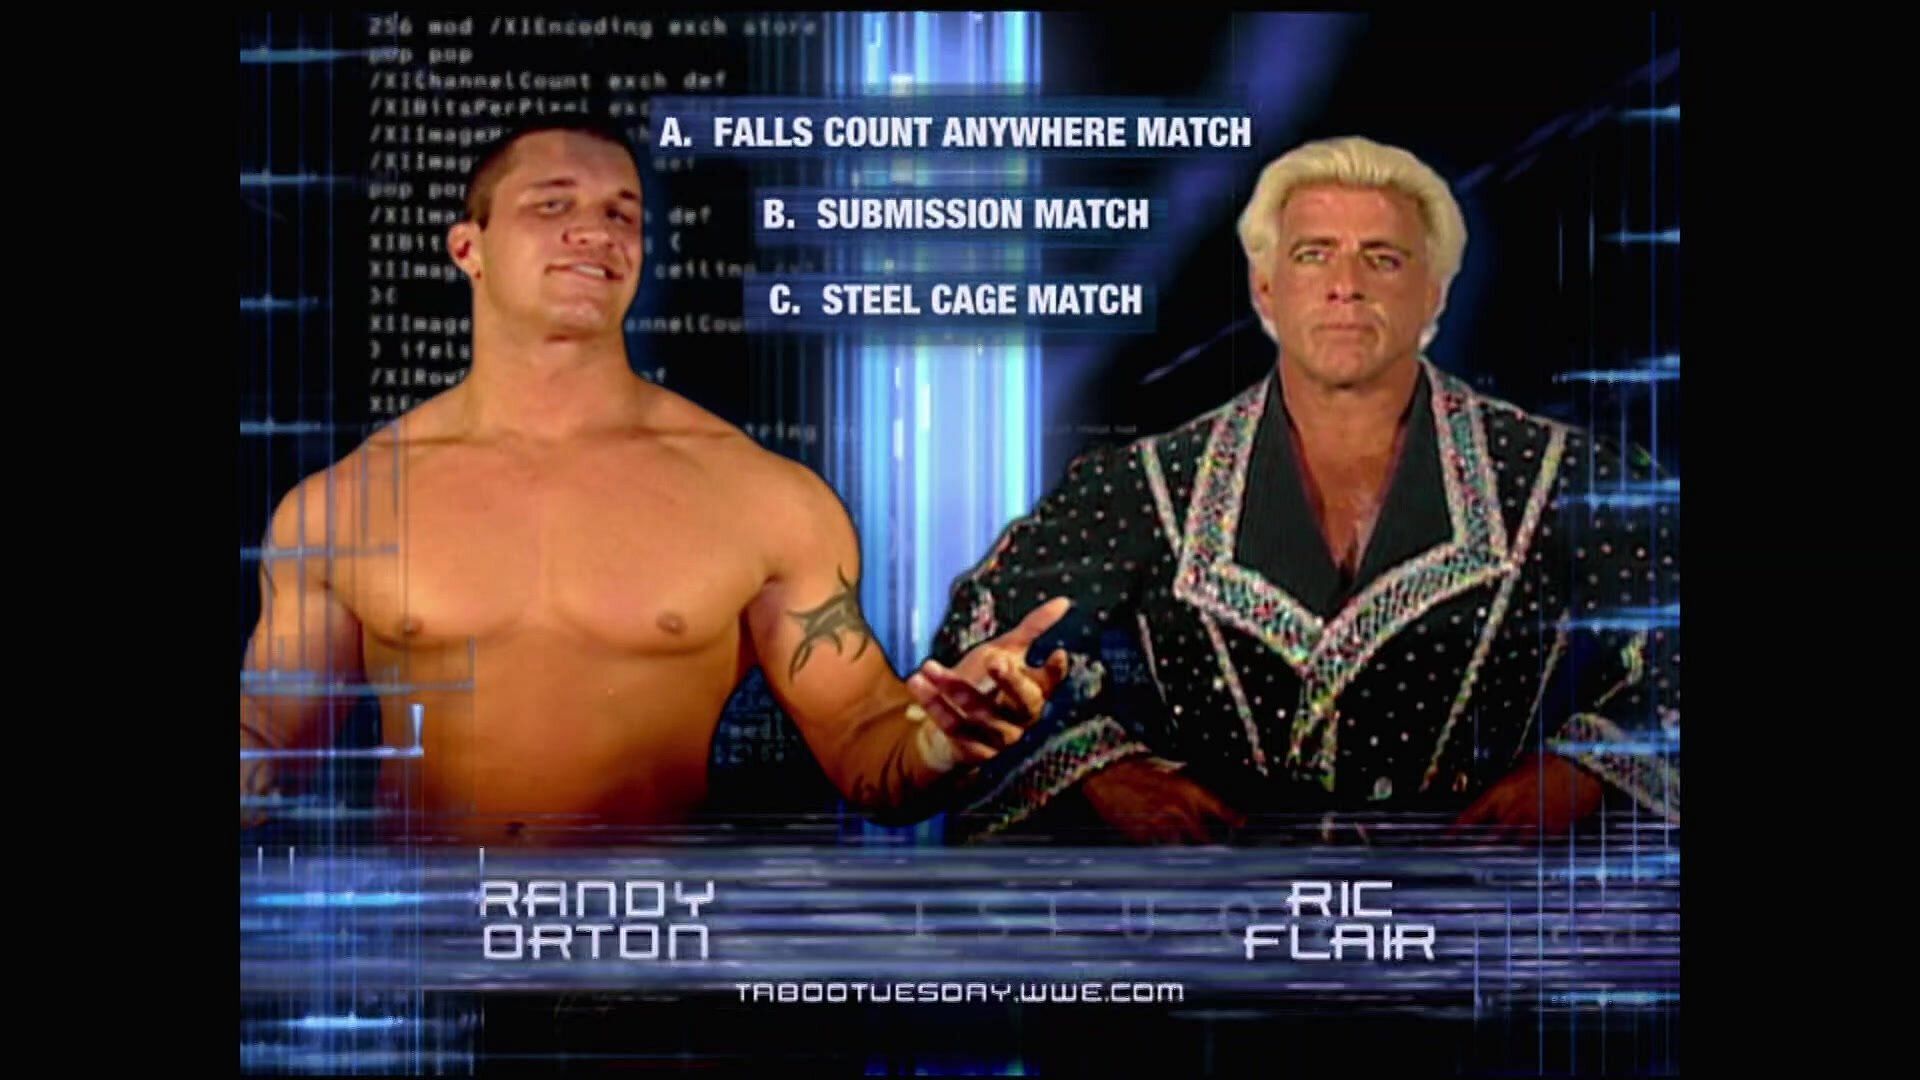 Randy Orton vs. Ric Flair